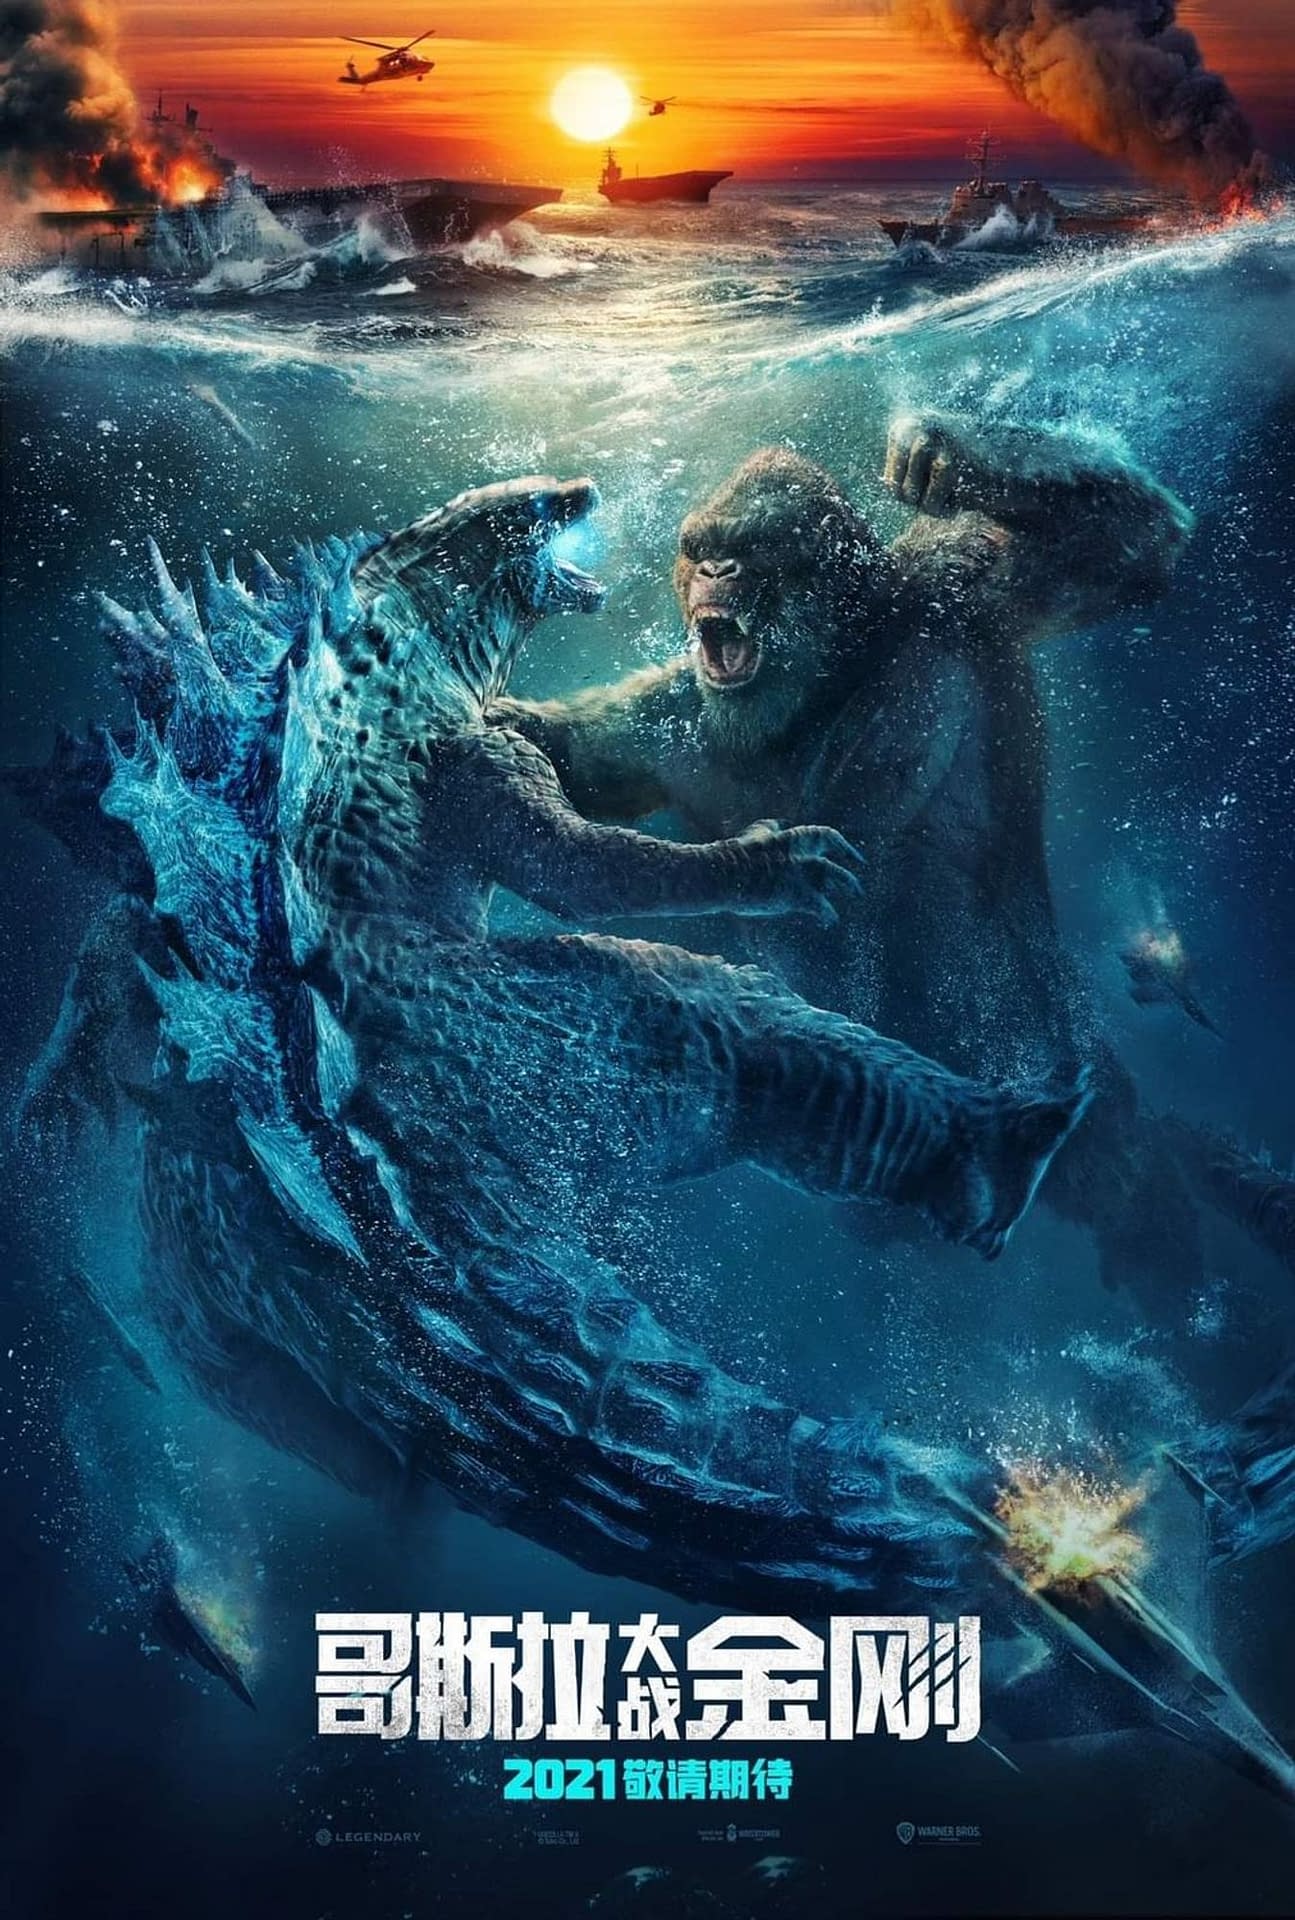 The New Godzilla vs. Kong International Poster is Very Punchy